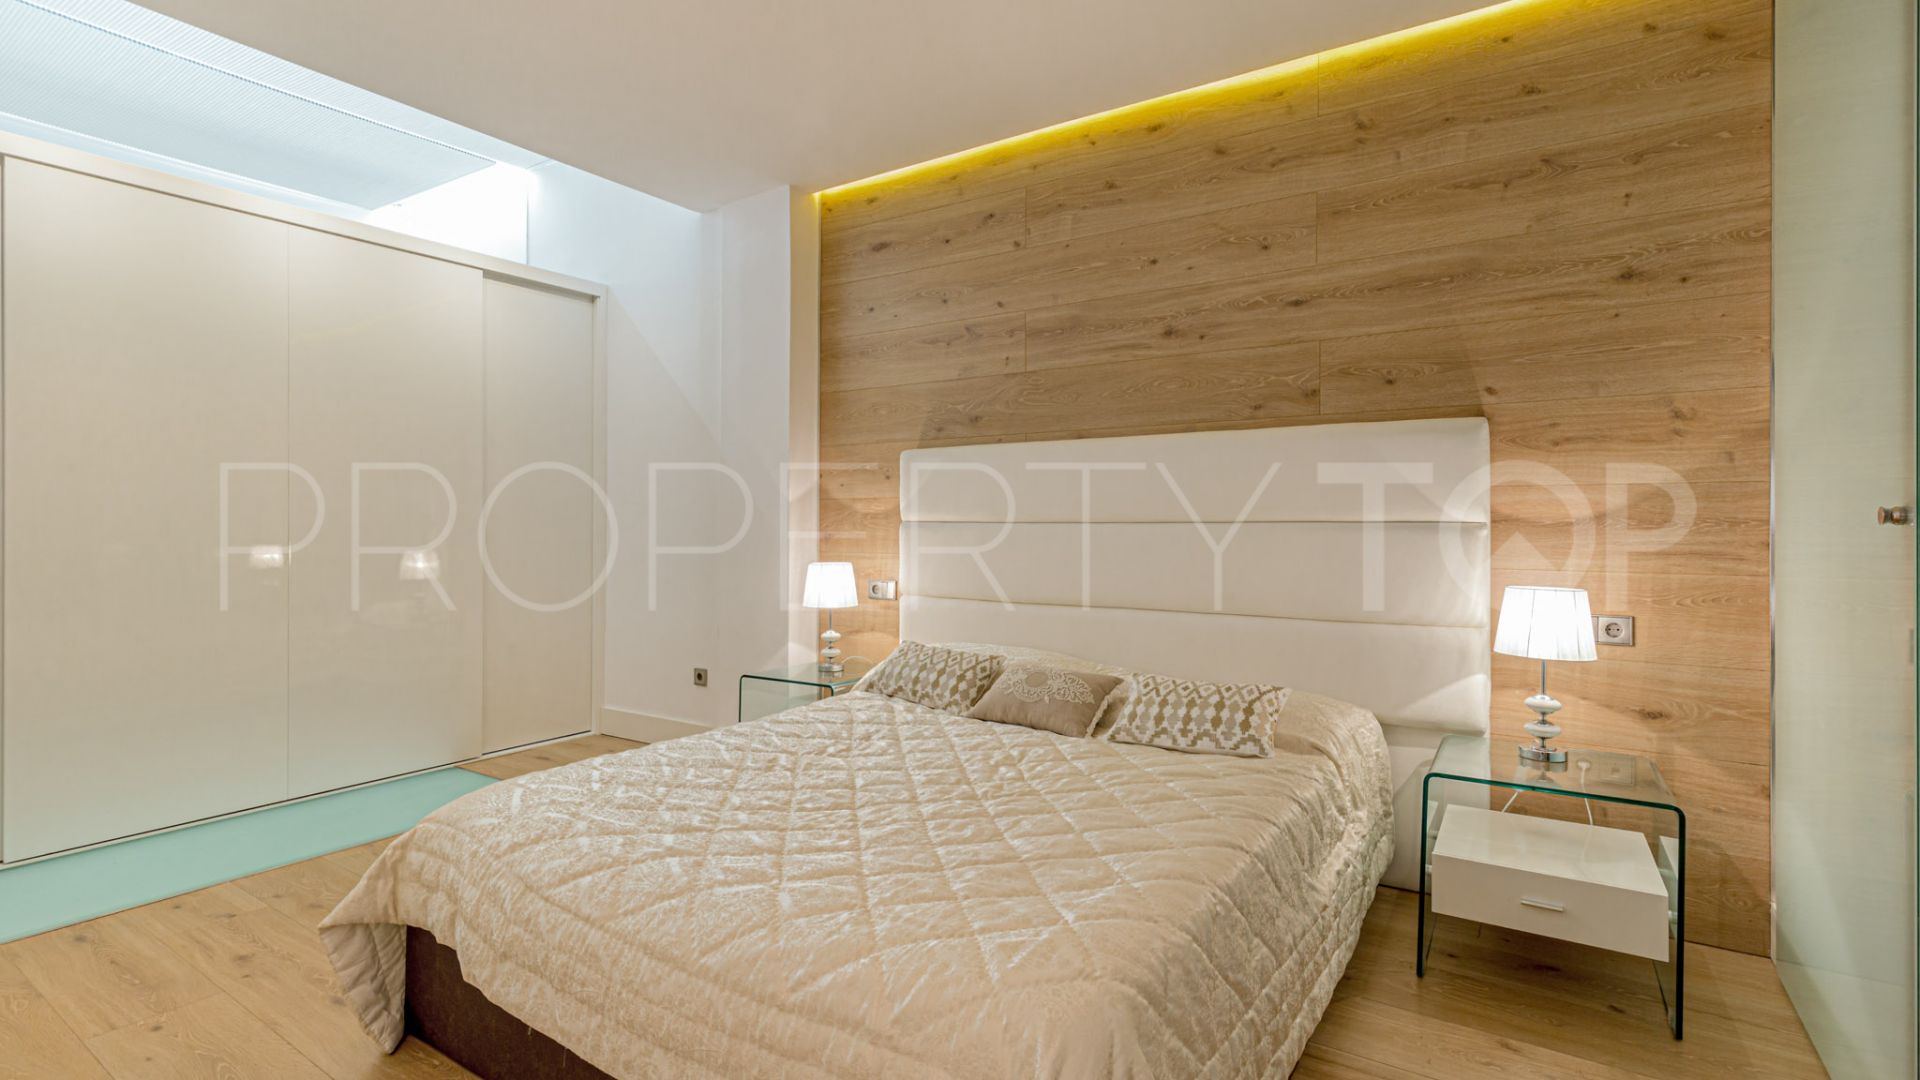 3 bedrooms apartment in Marbella - Puerto Banus for sale